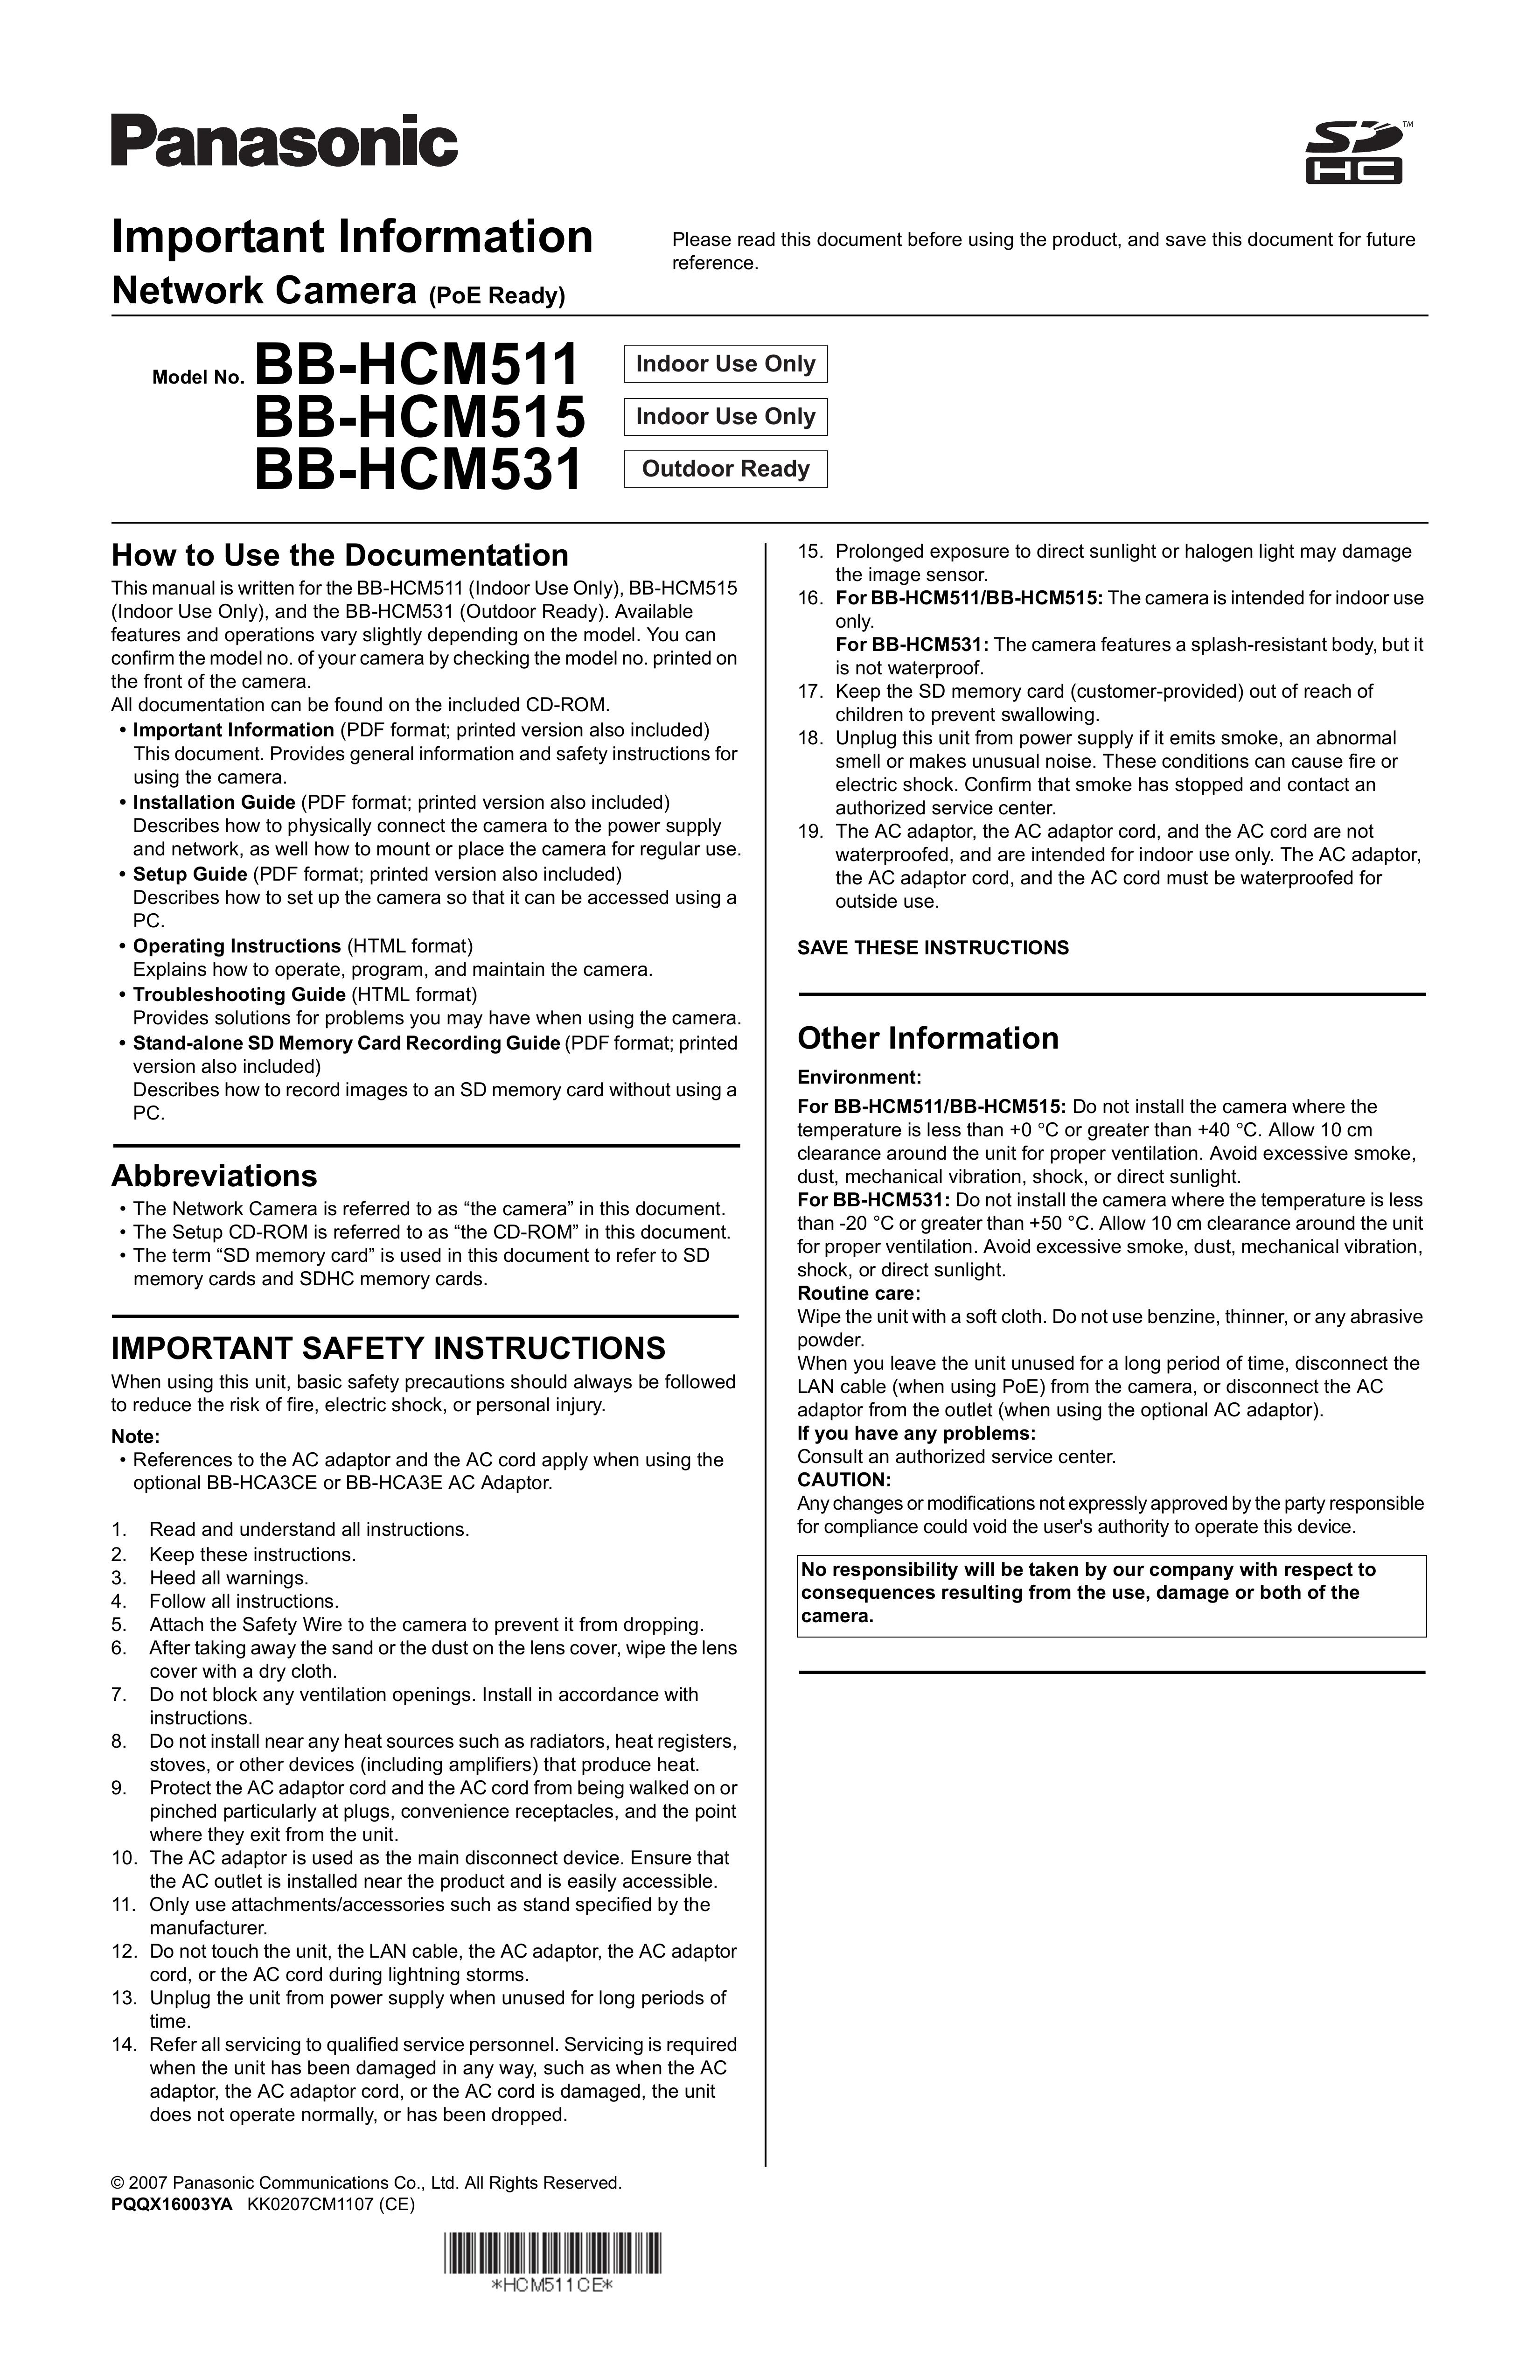 Panasonic BB-HCM531 Security Camera User Manual